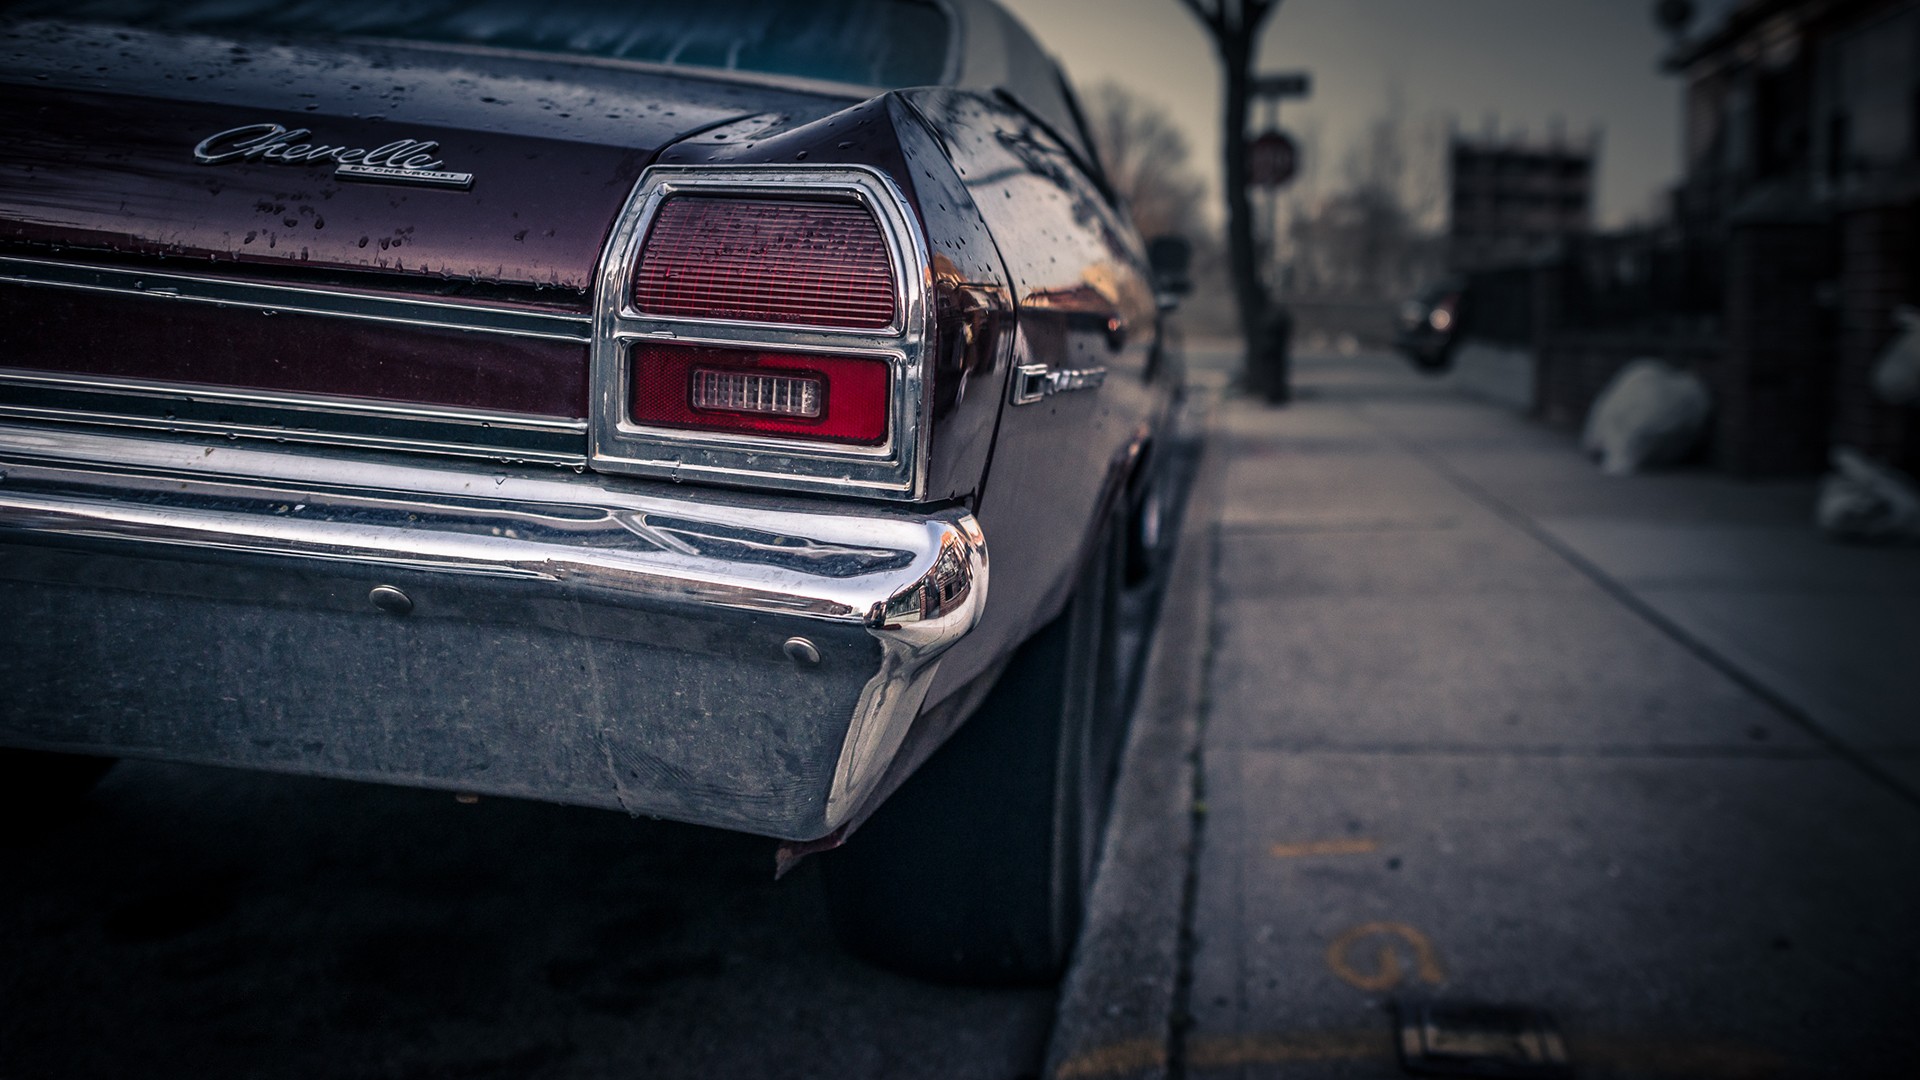 Chevrolet Impala 1967 Tail Light